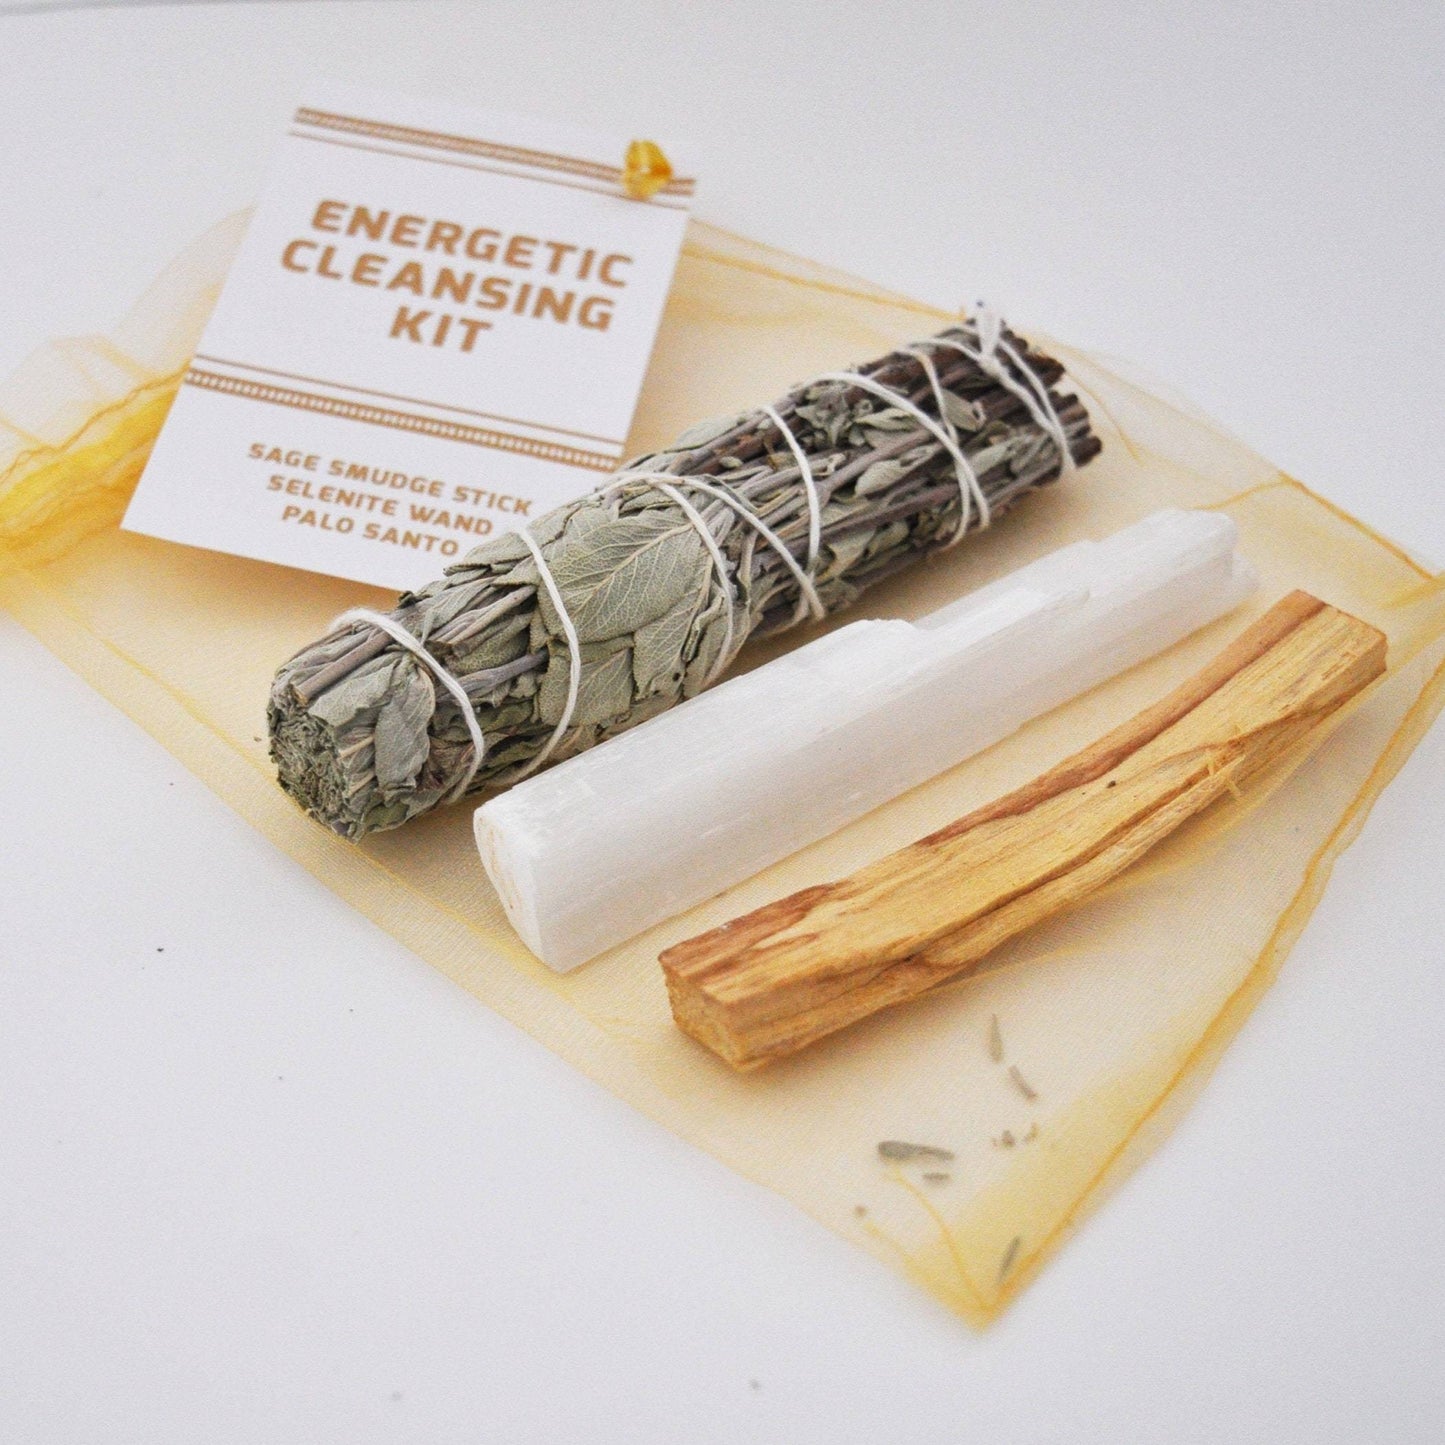 Energy Cleansing Kit / Sage Smudge Stick, Palo Santo, Selenite Wand / –  Feminfinite